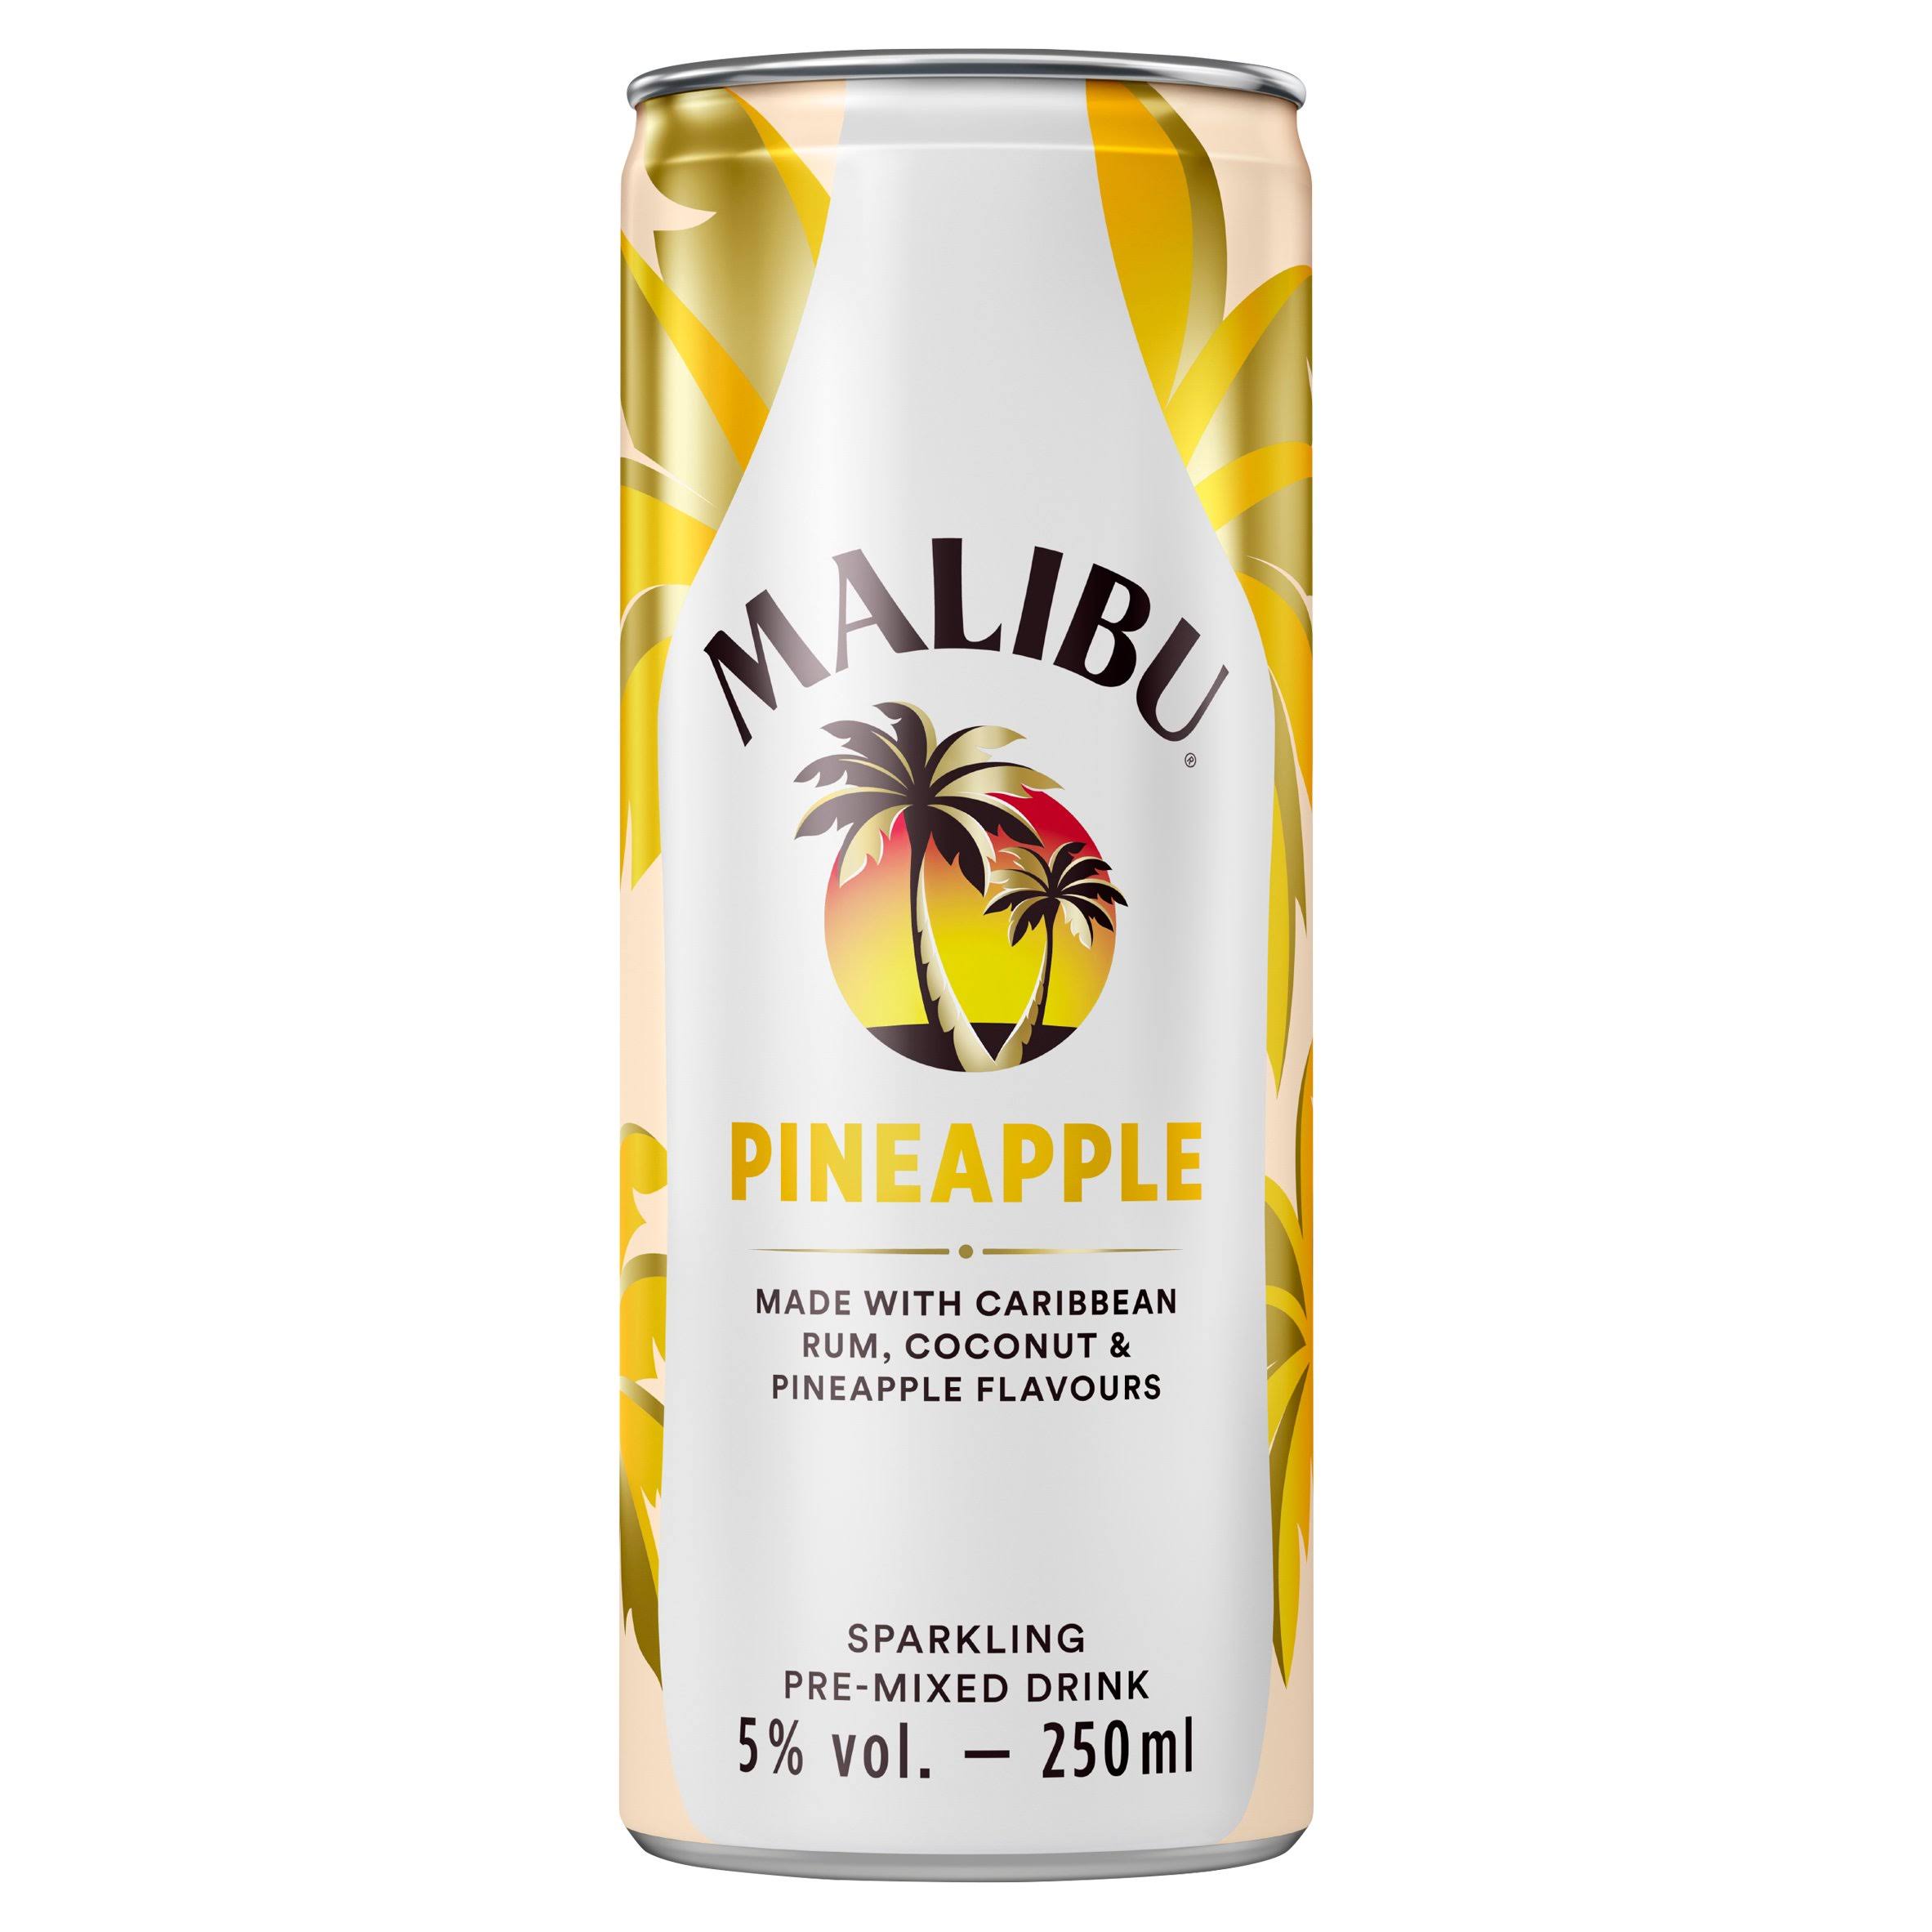 Malibu Sparkling Pre Mixed Drink - Pineapple, 250ml